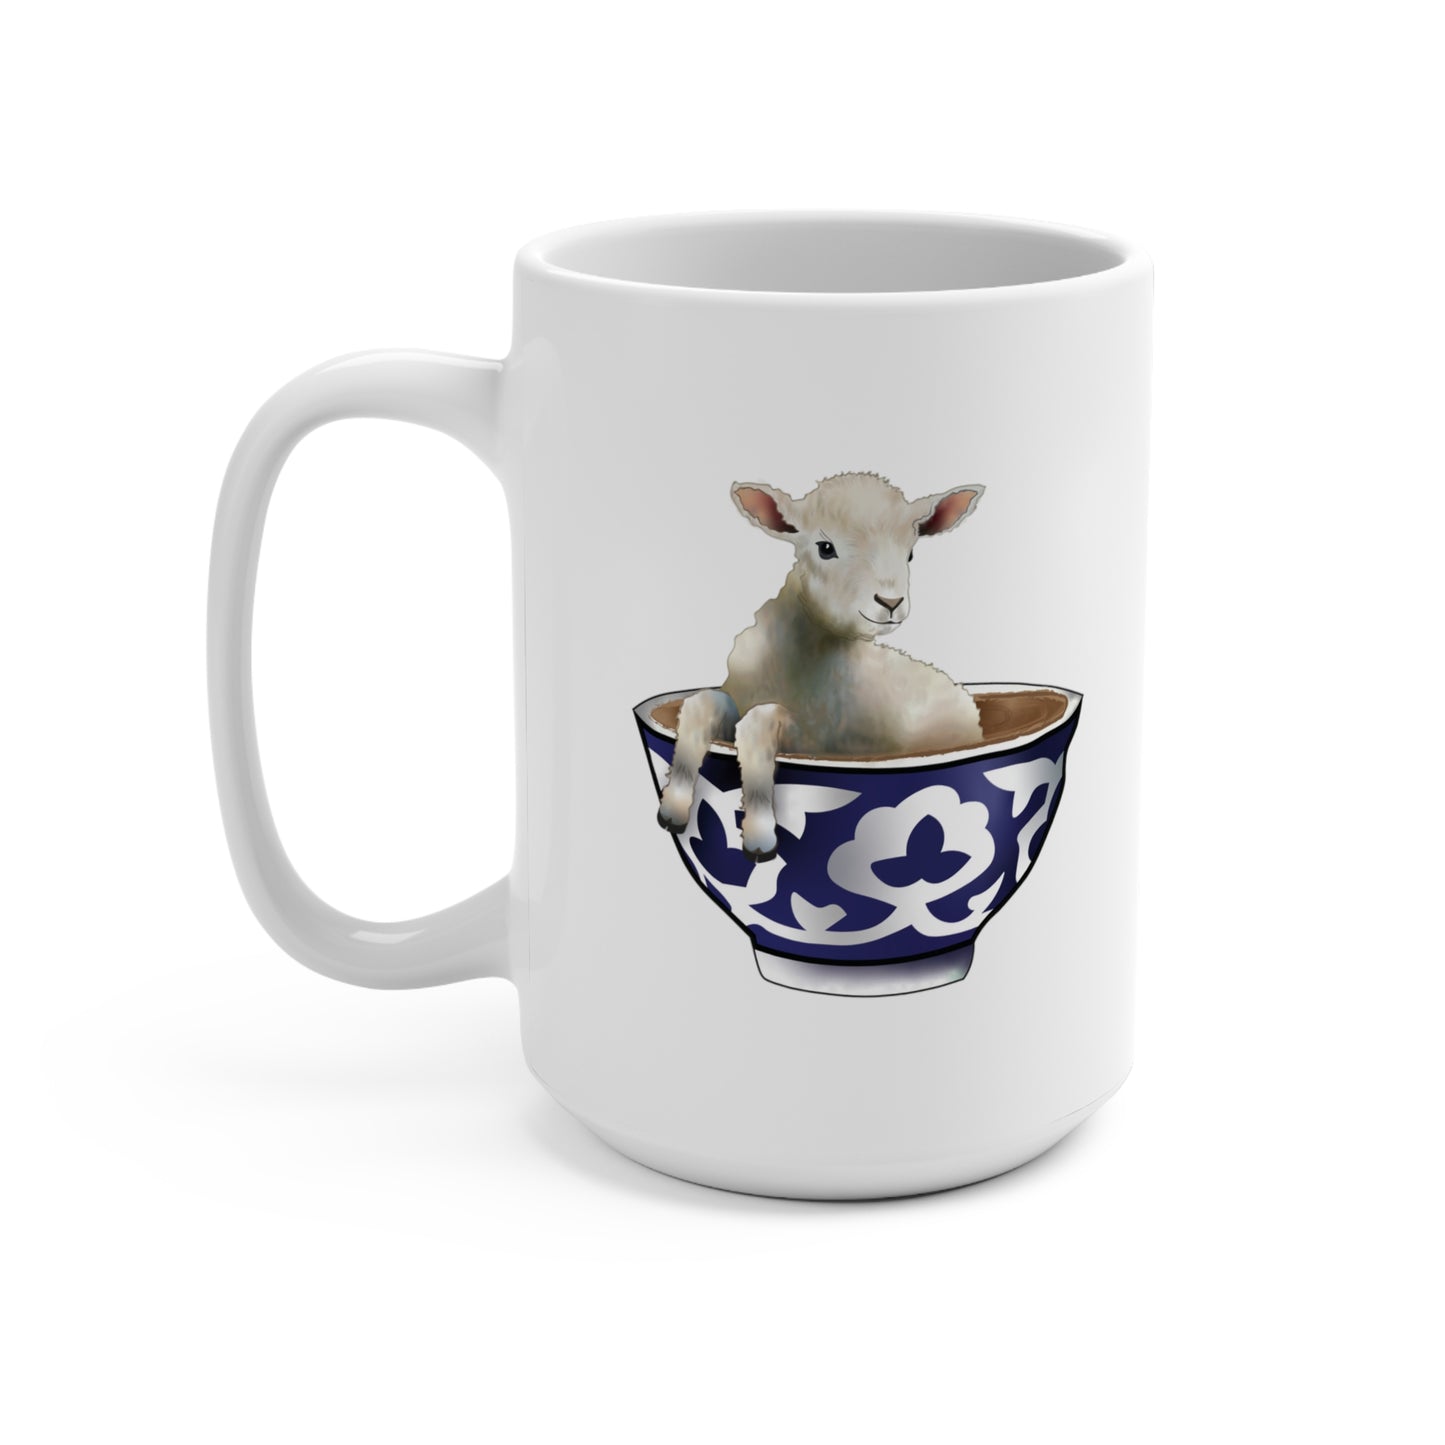 Sheep in the cup Mug 15oz